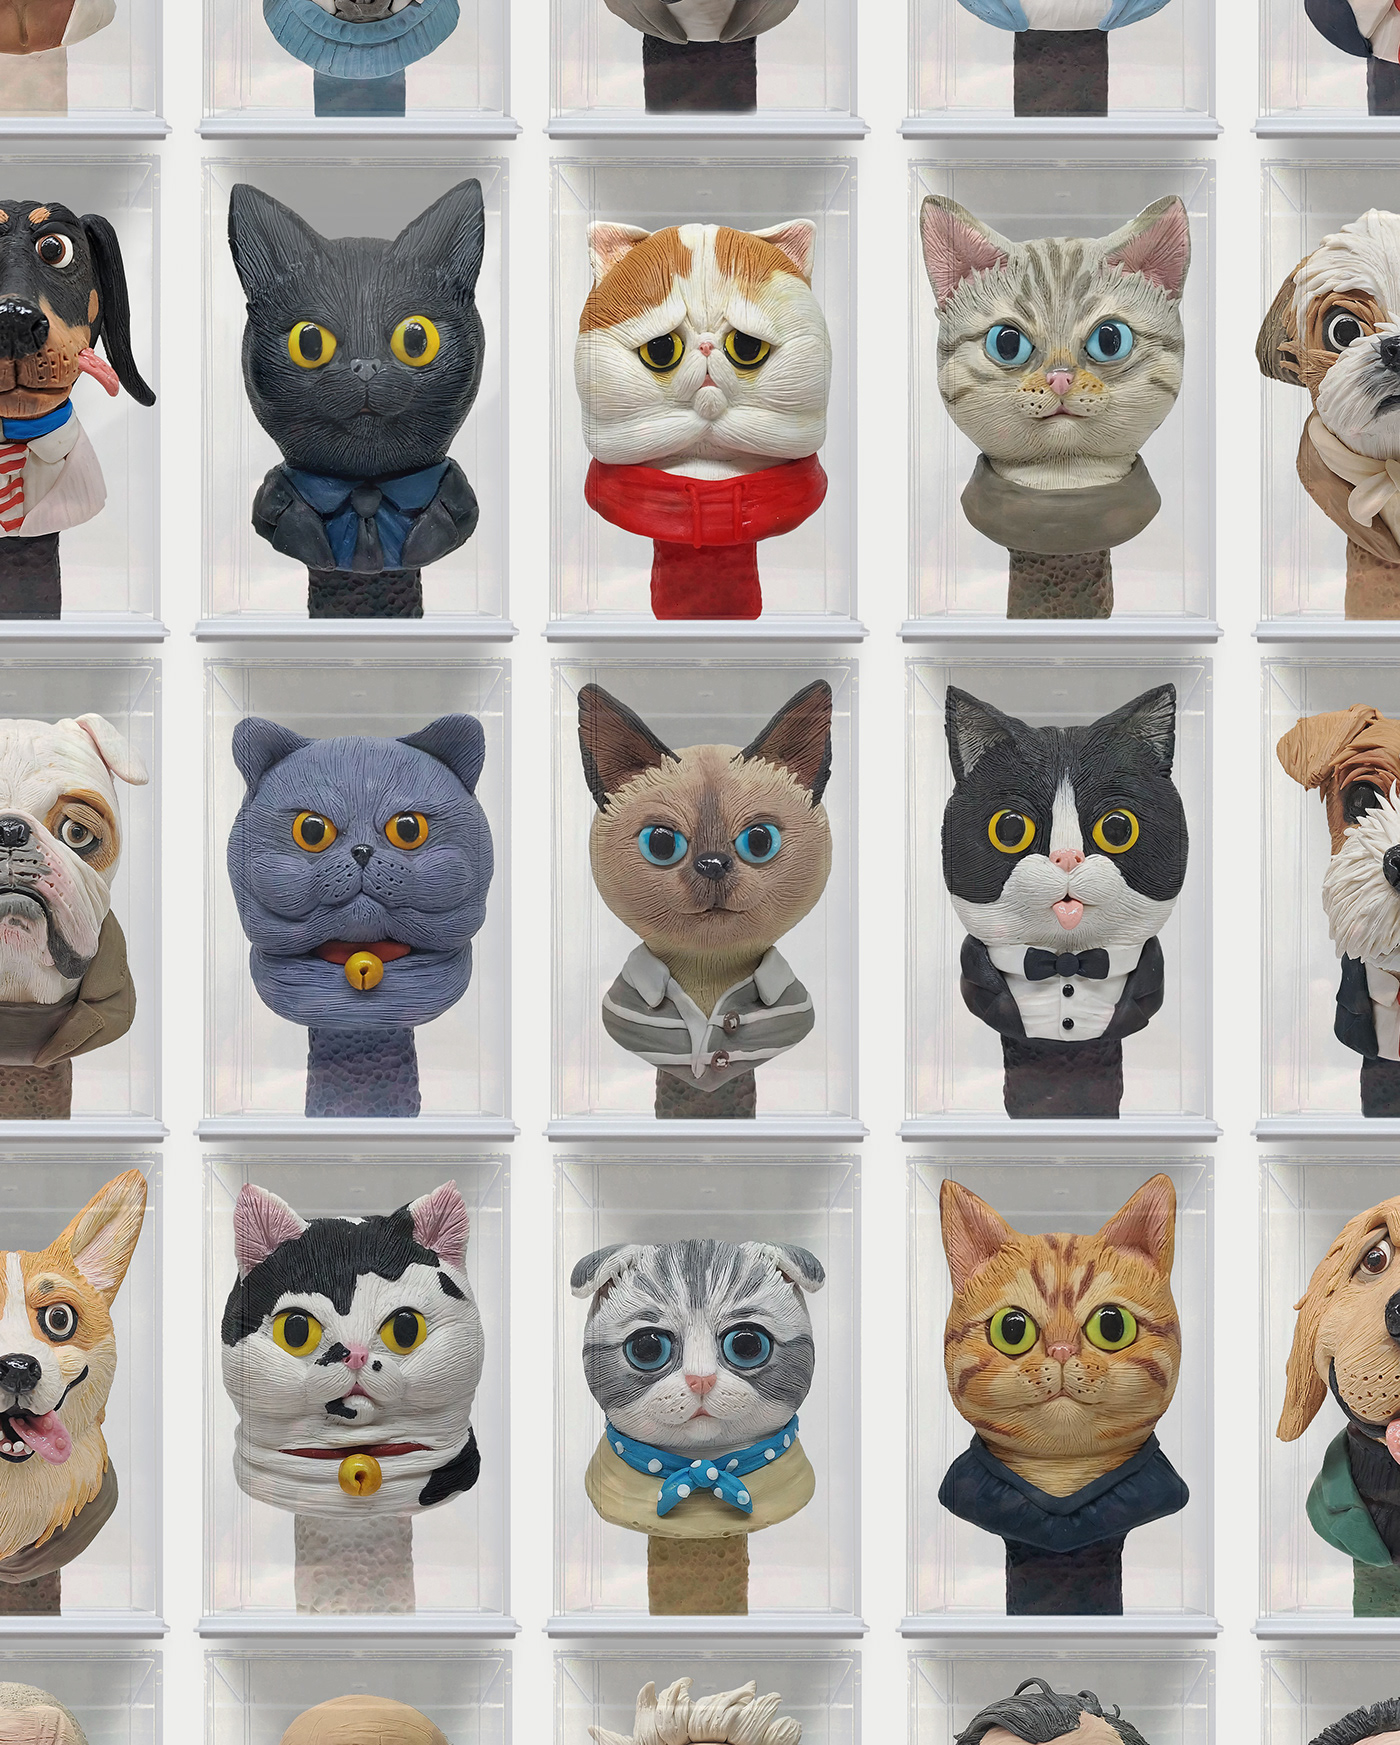 animals artwork concept art clay sculpting  Character cute Cat cartoon animation 